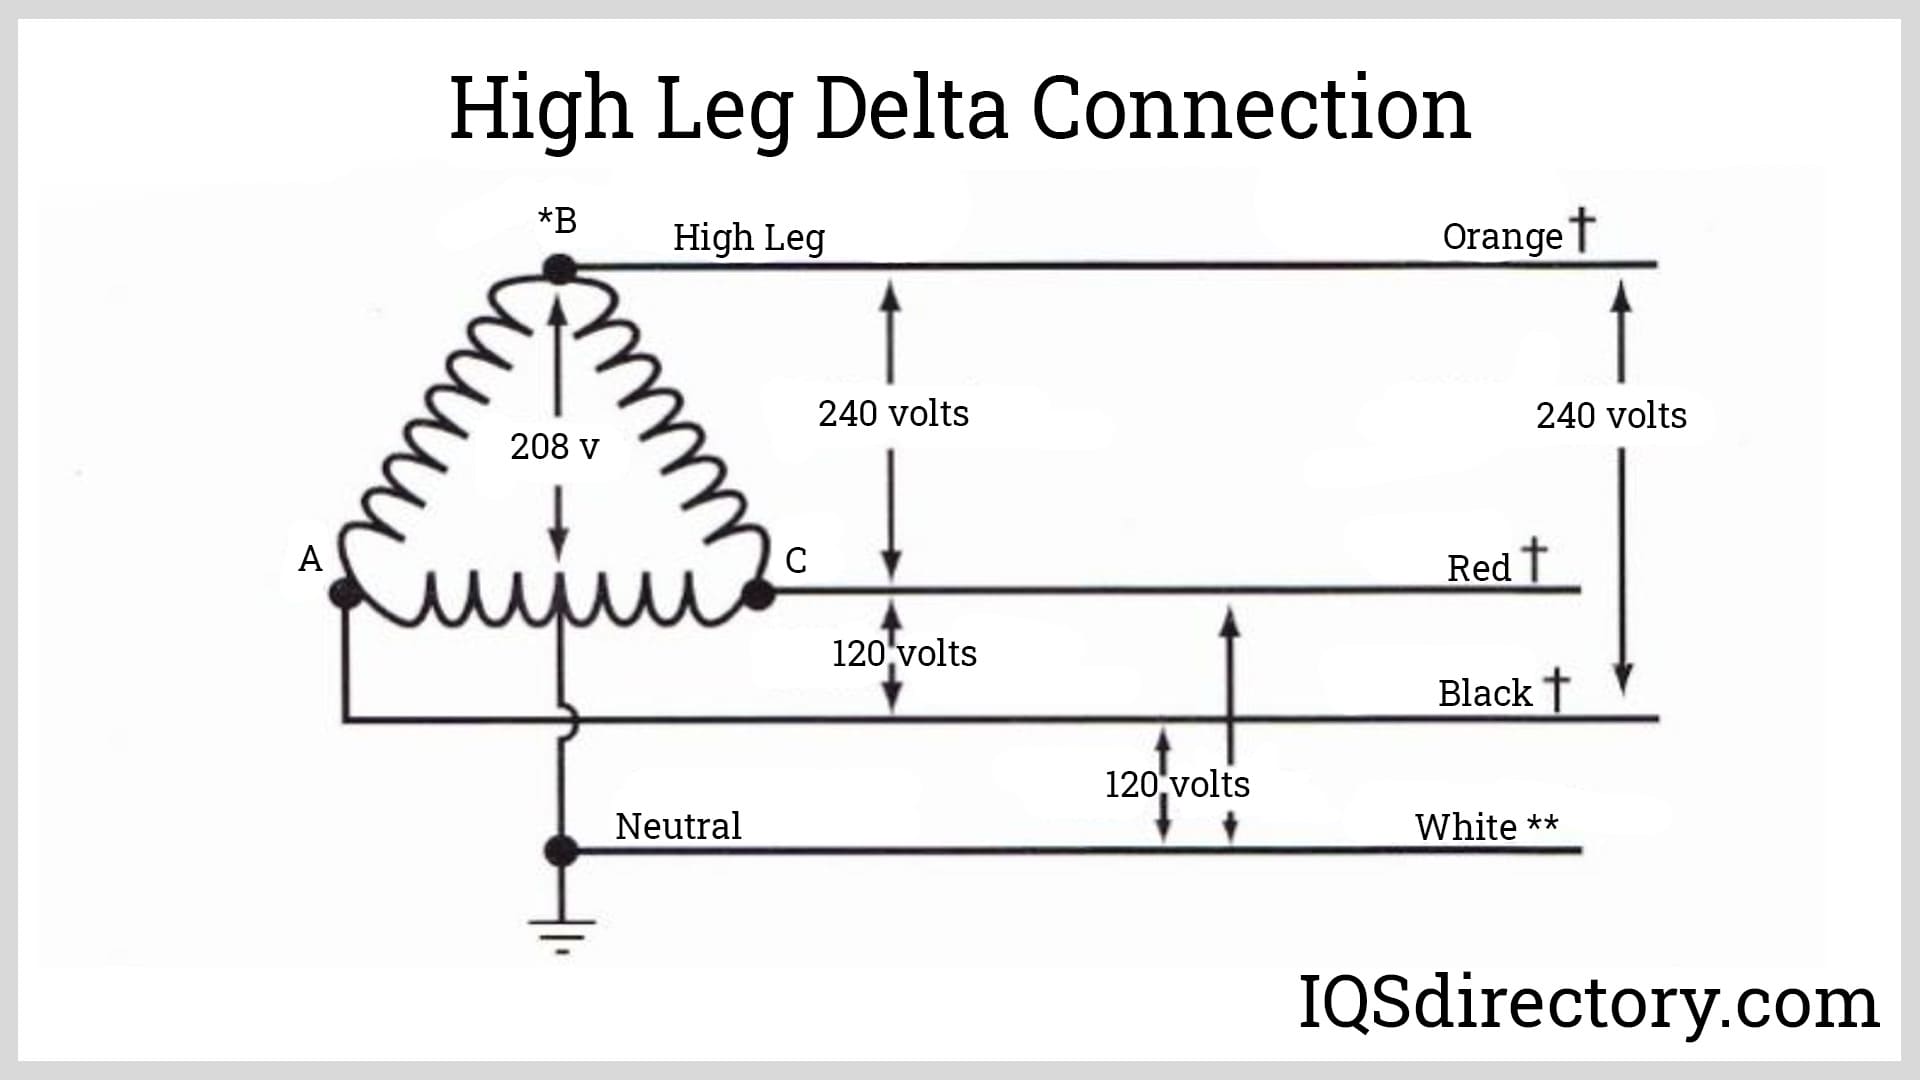 High Leg Delta Connection